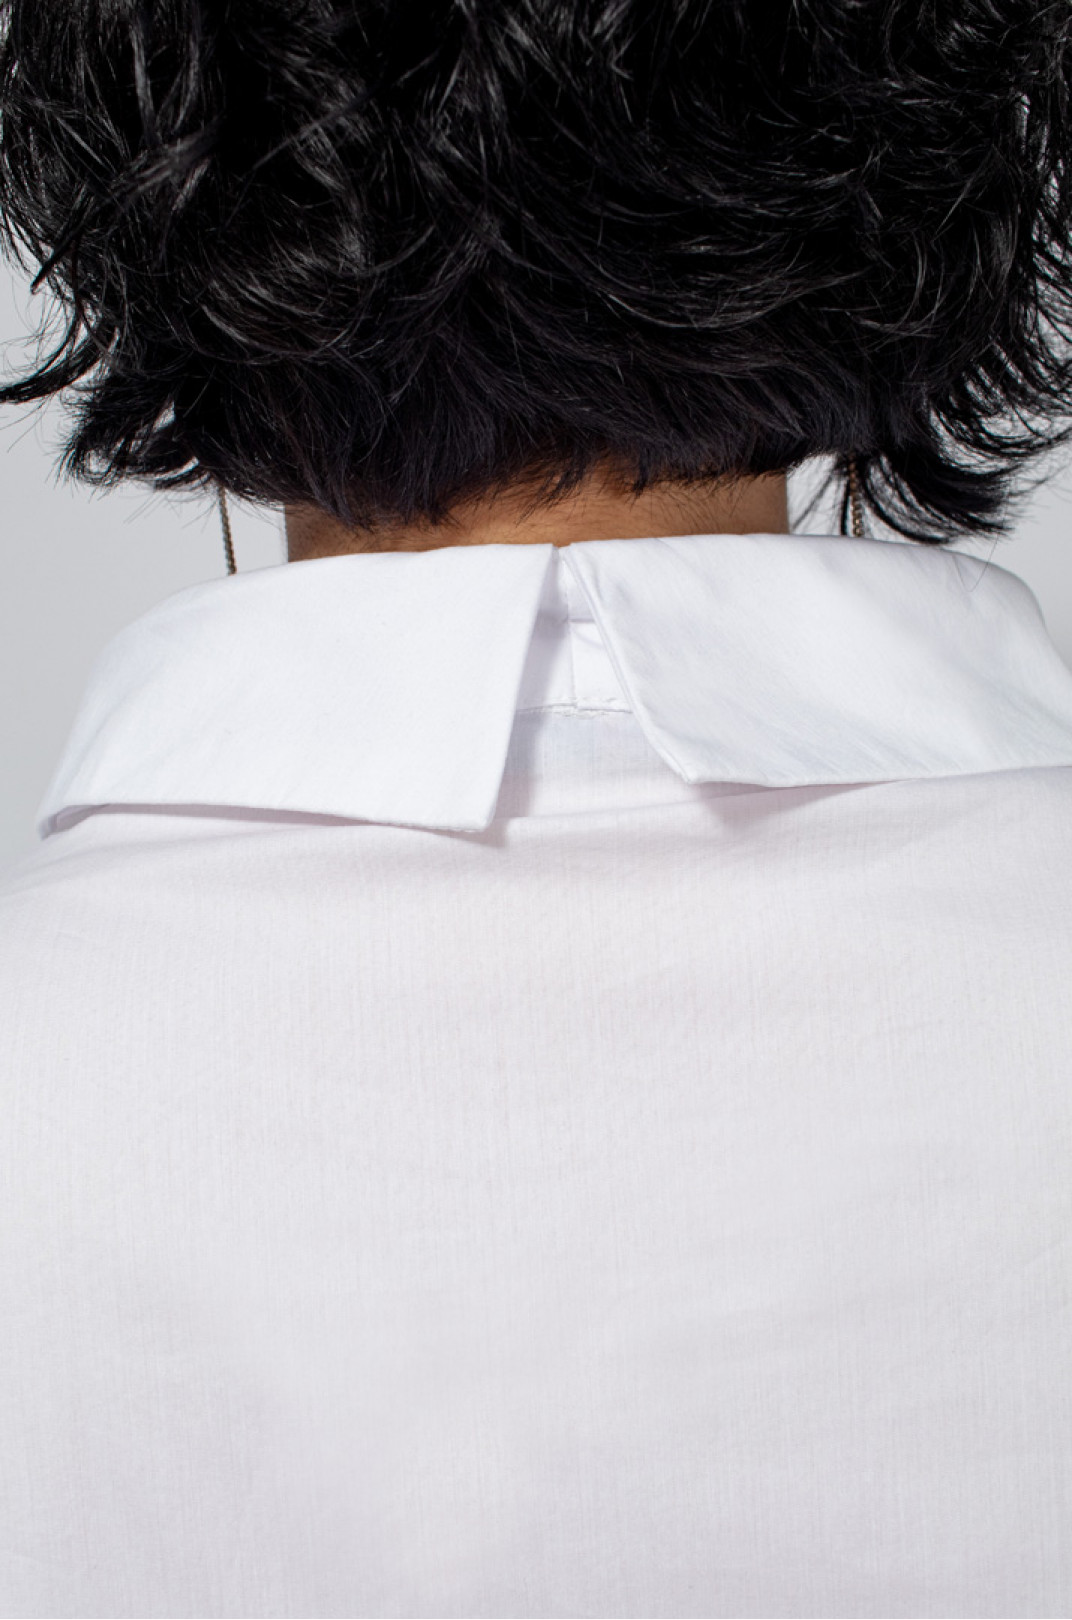 Нарядная блуза с рукавом воланом батал